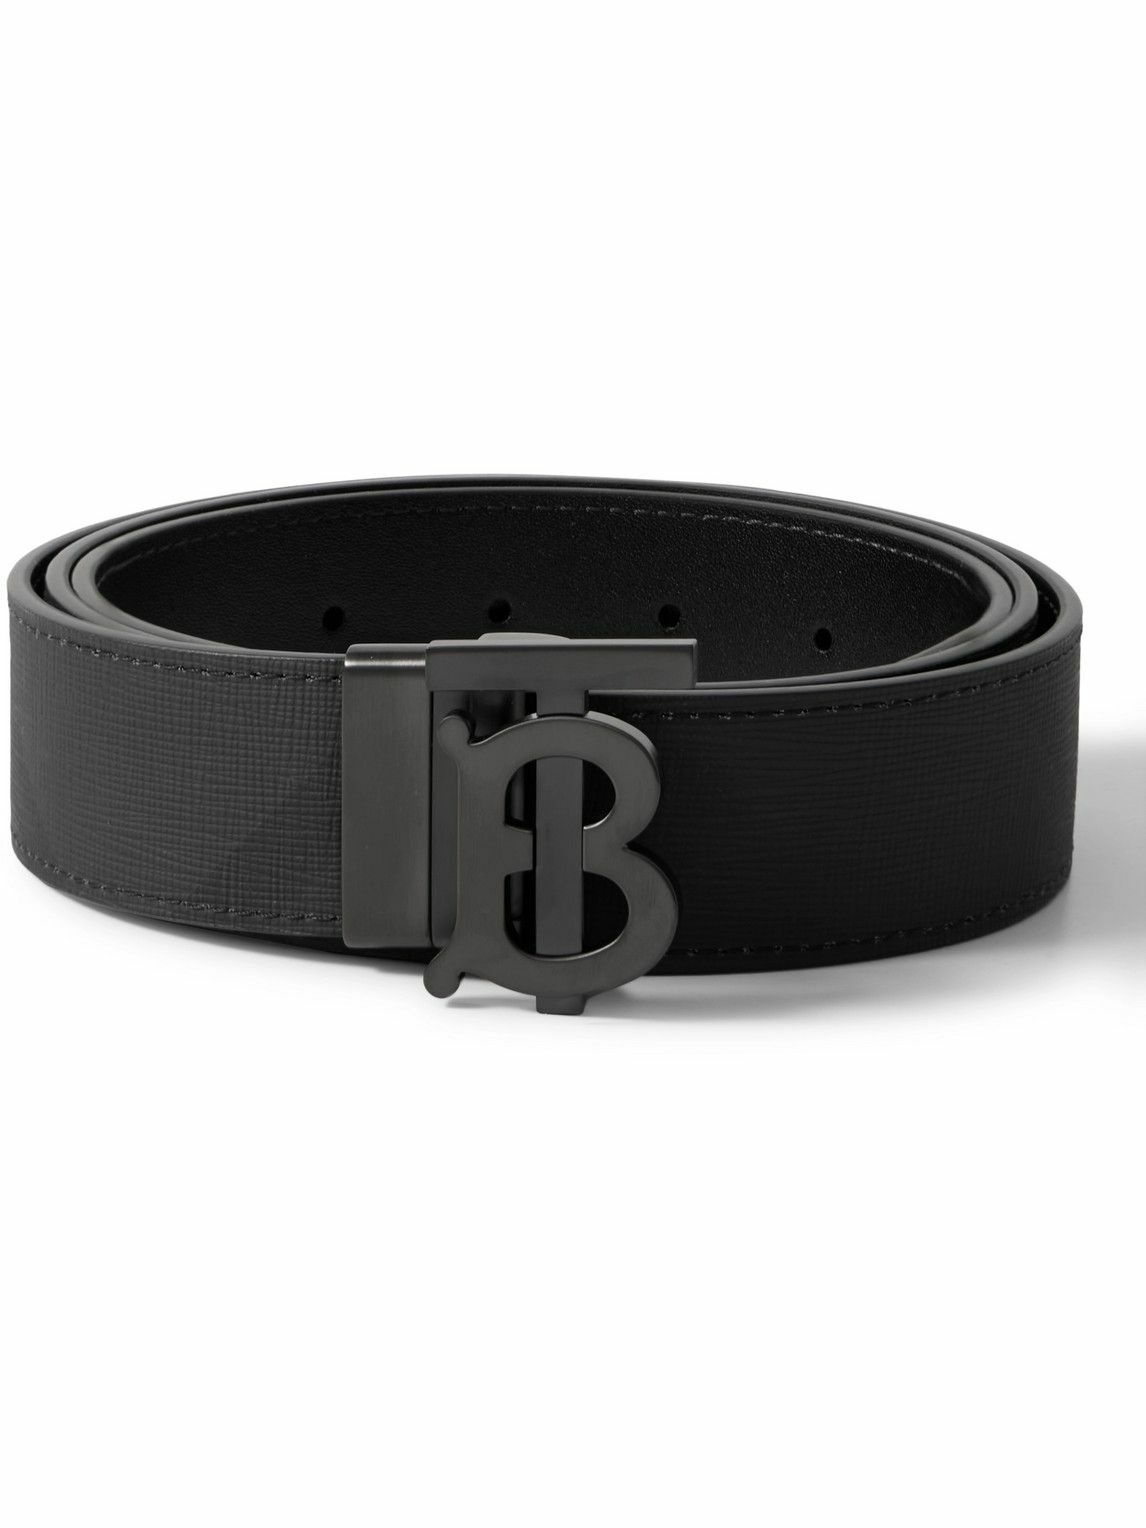 Burberry Men's Tb-buckle Check Faux-Leather Belt